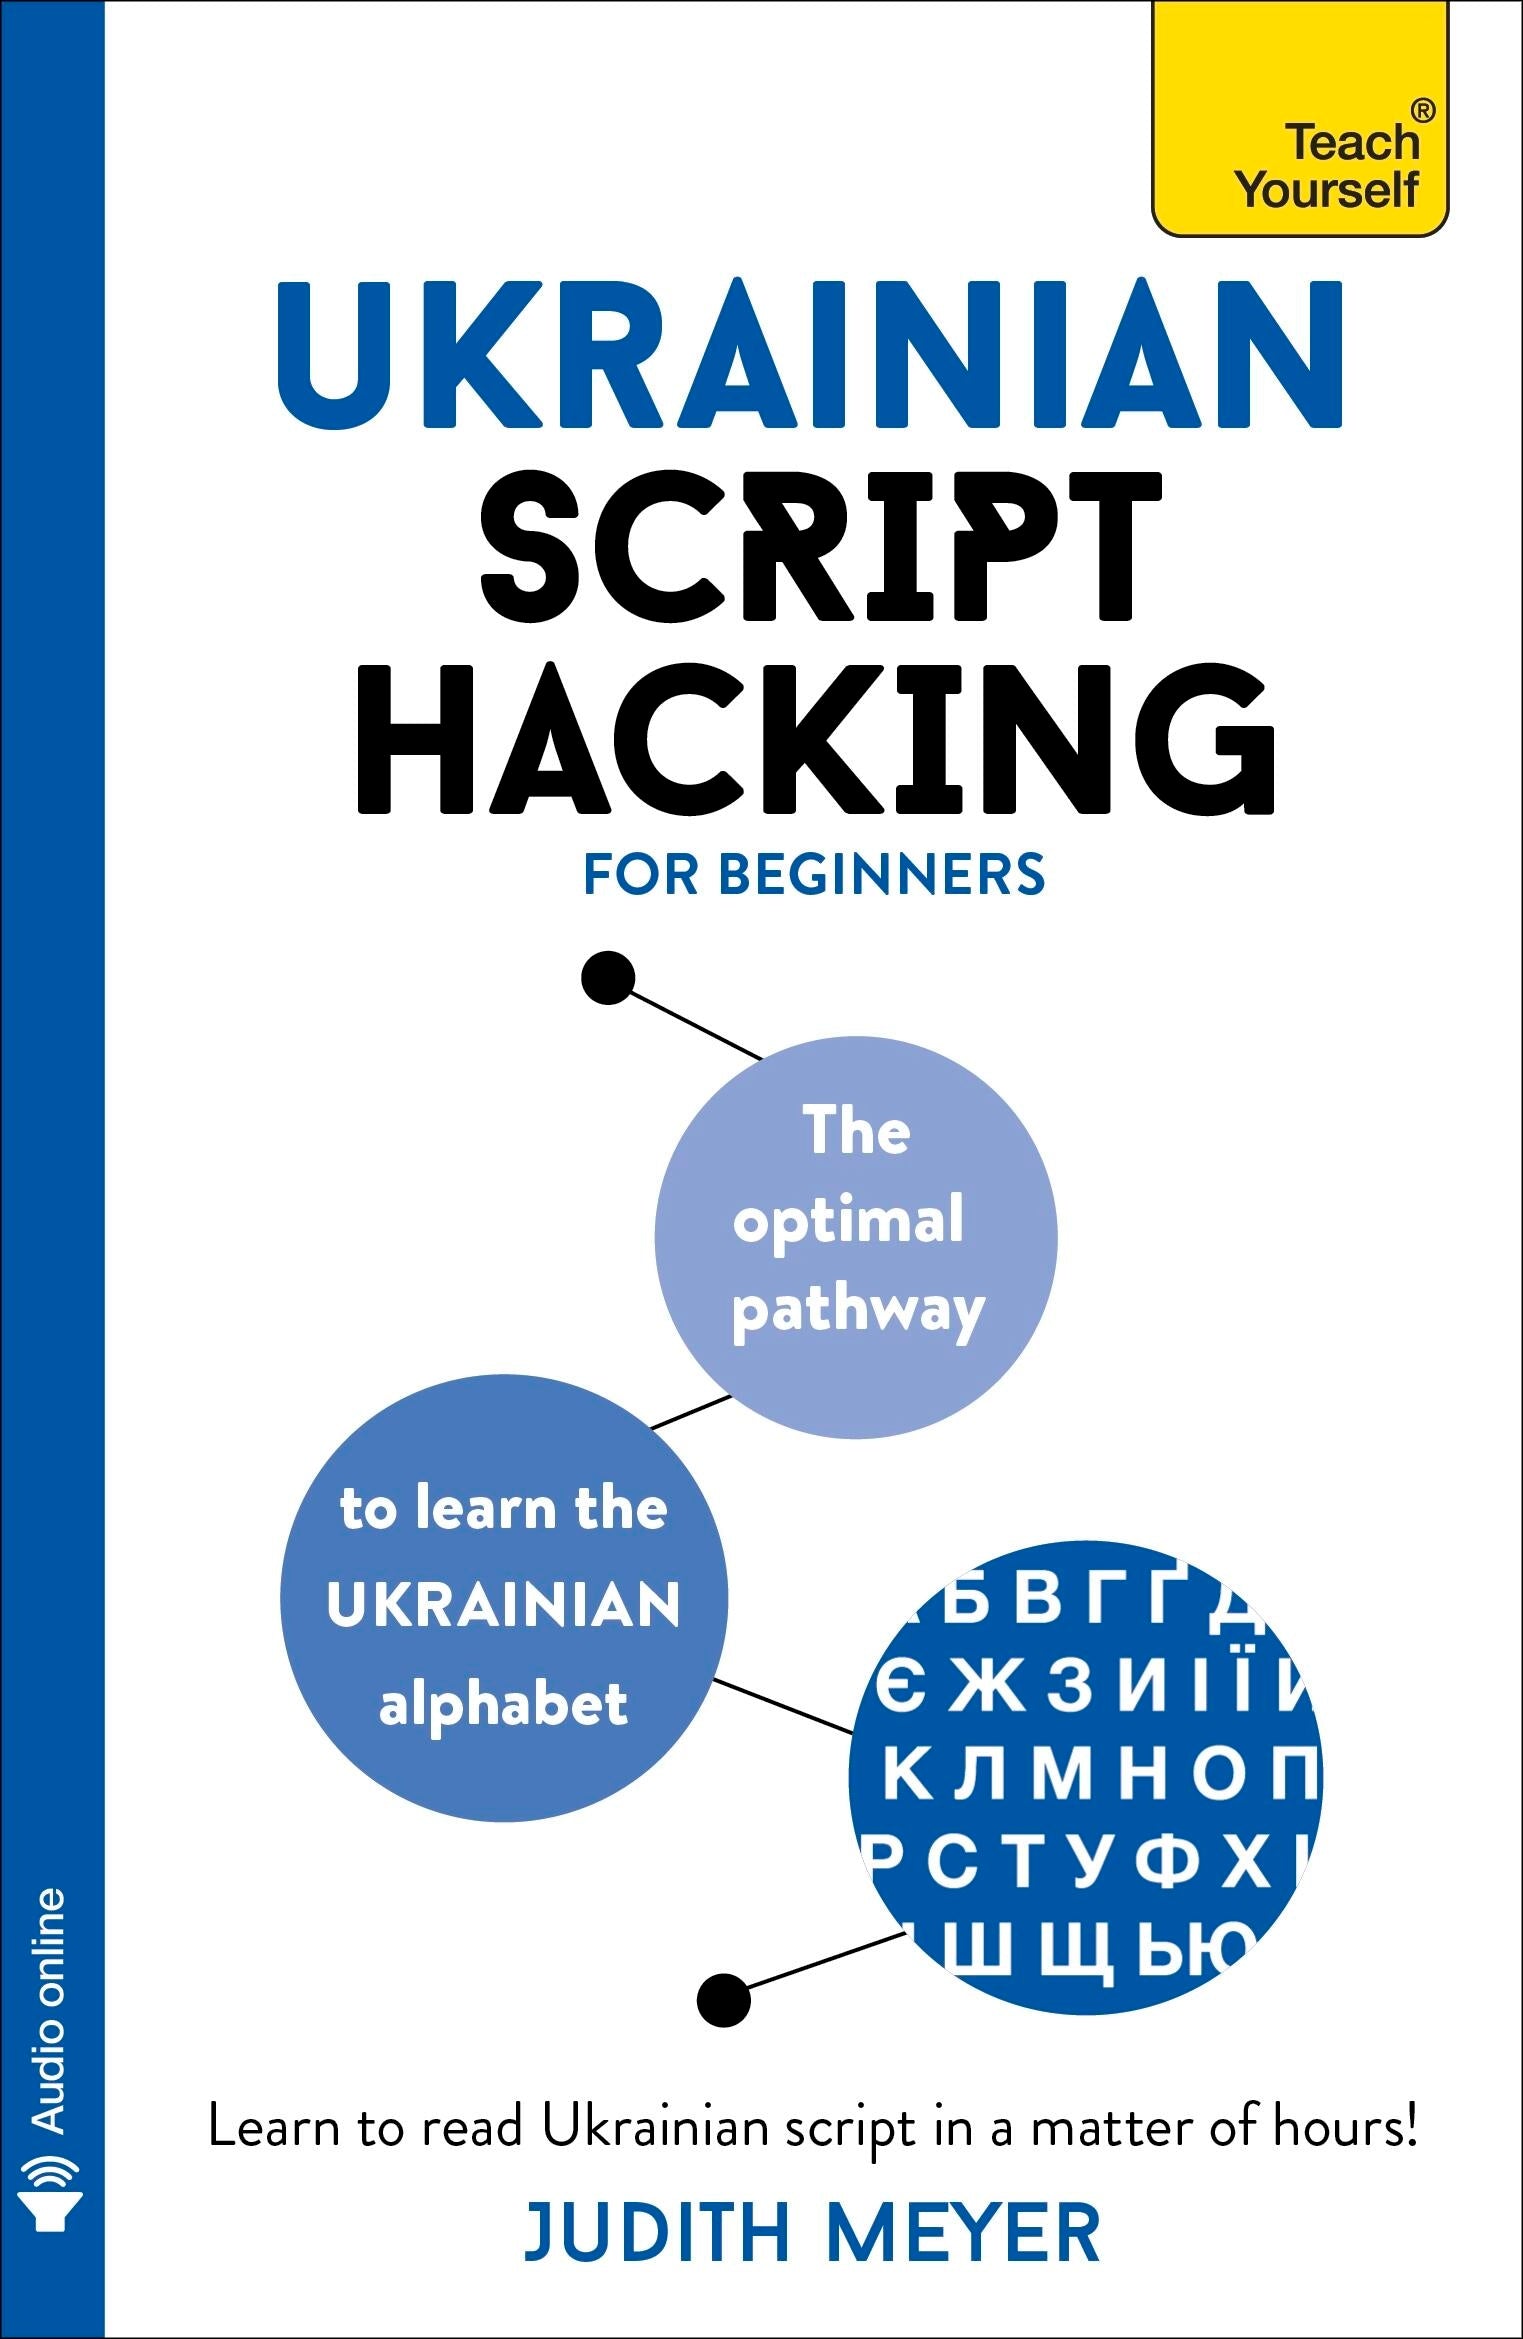 Ukrainian Script Hacking by Judith Meyer